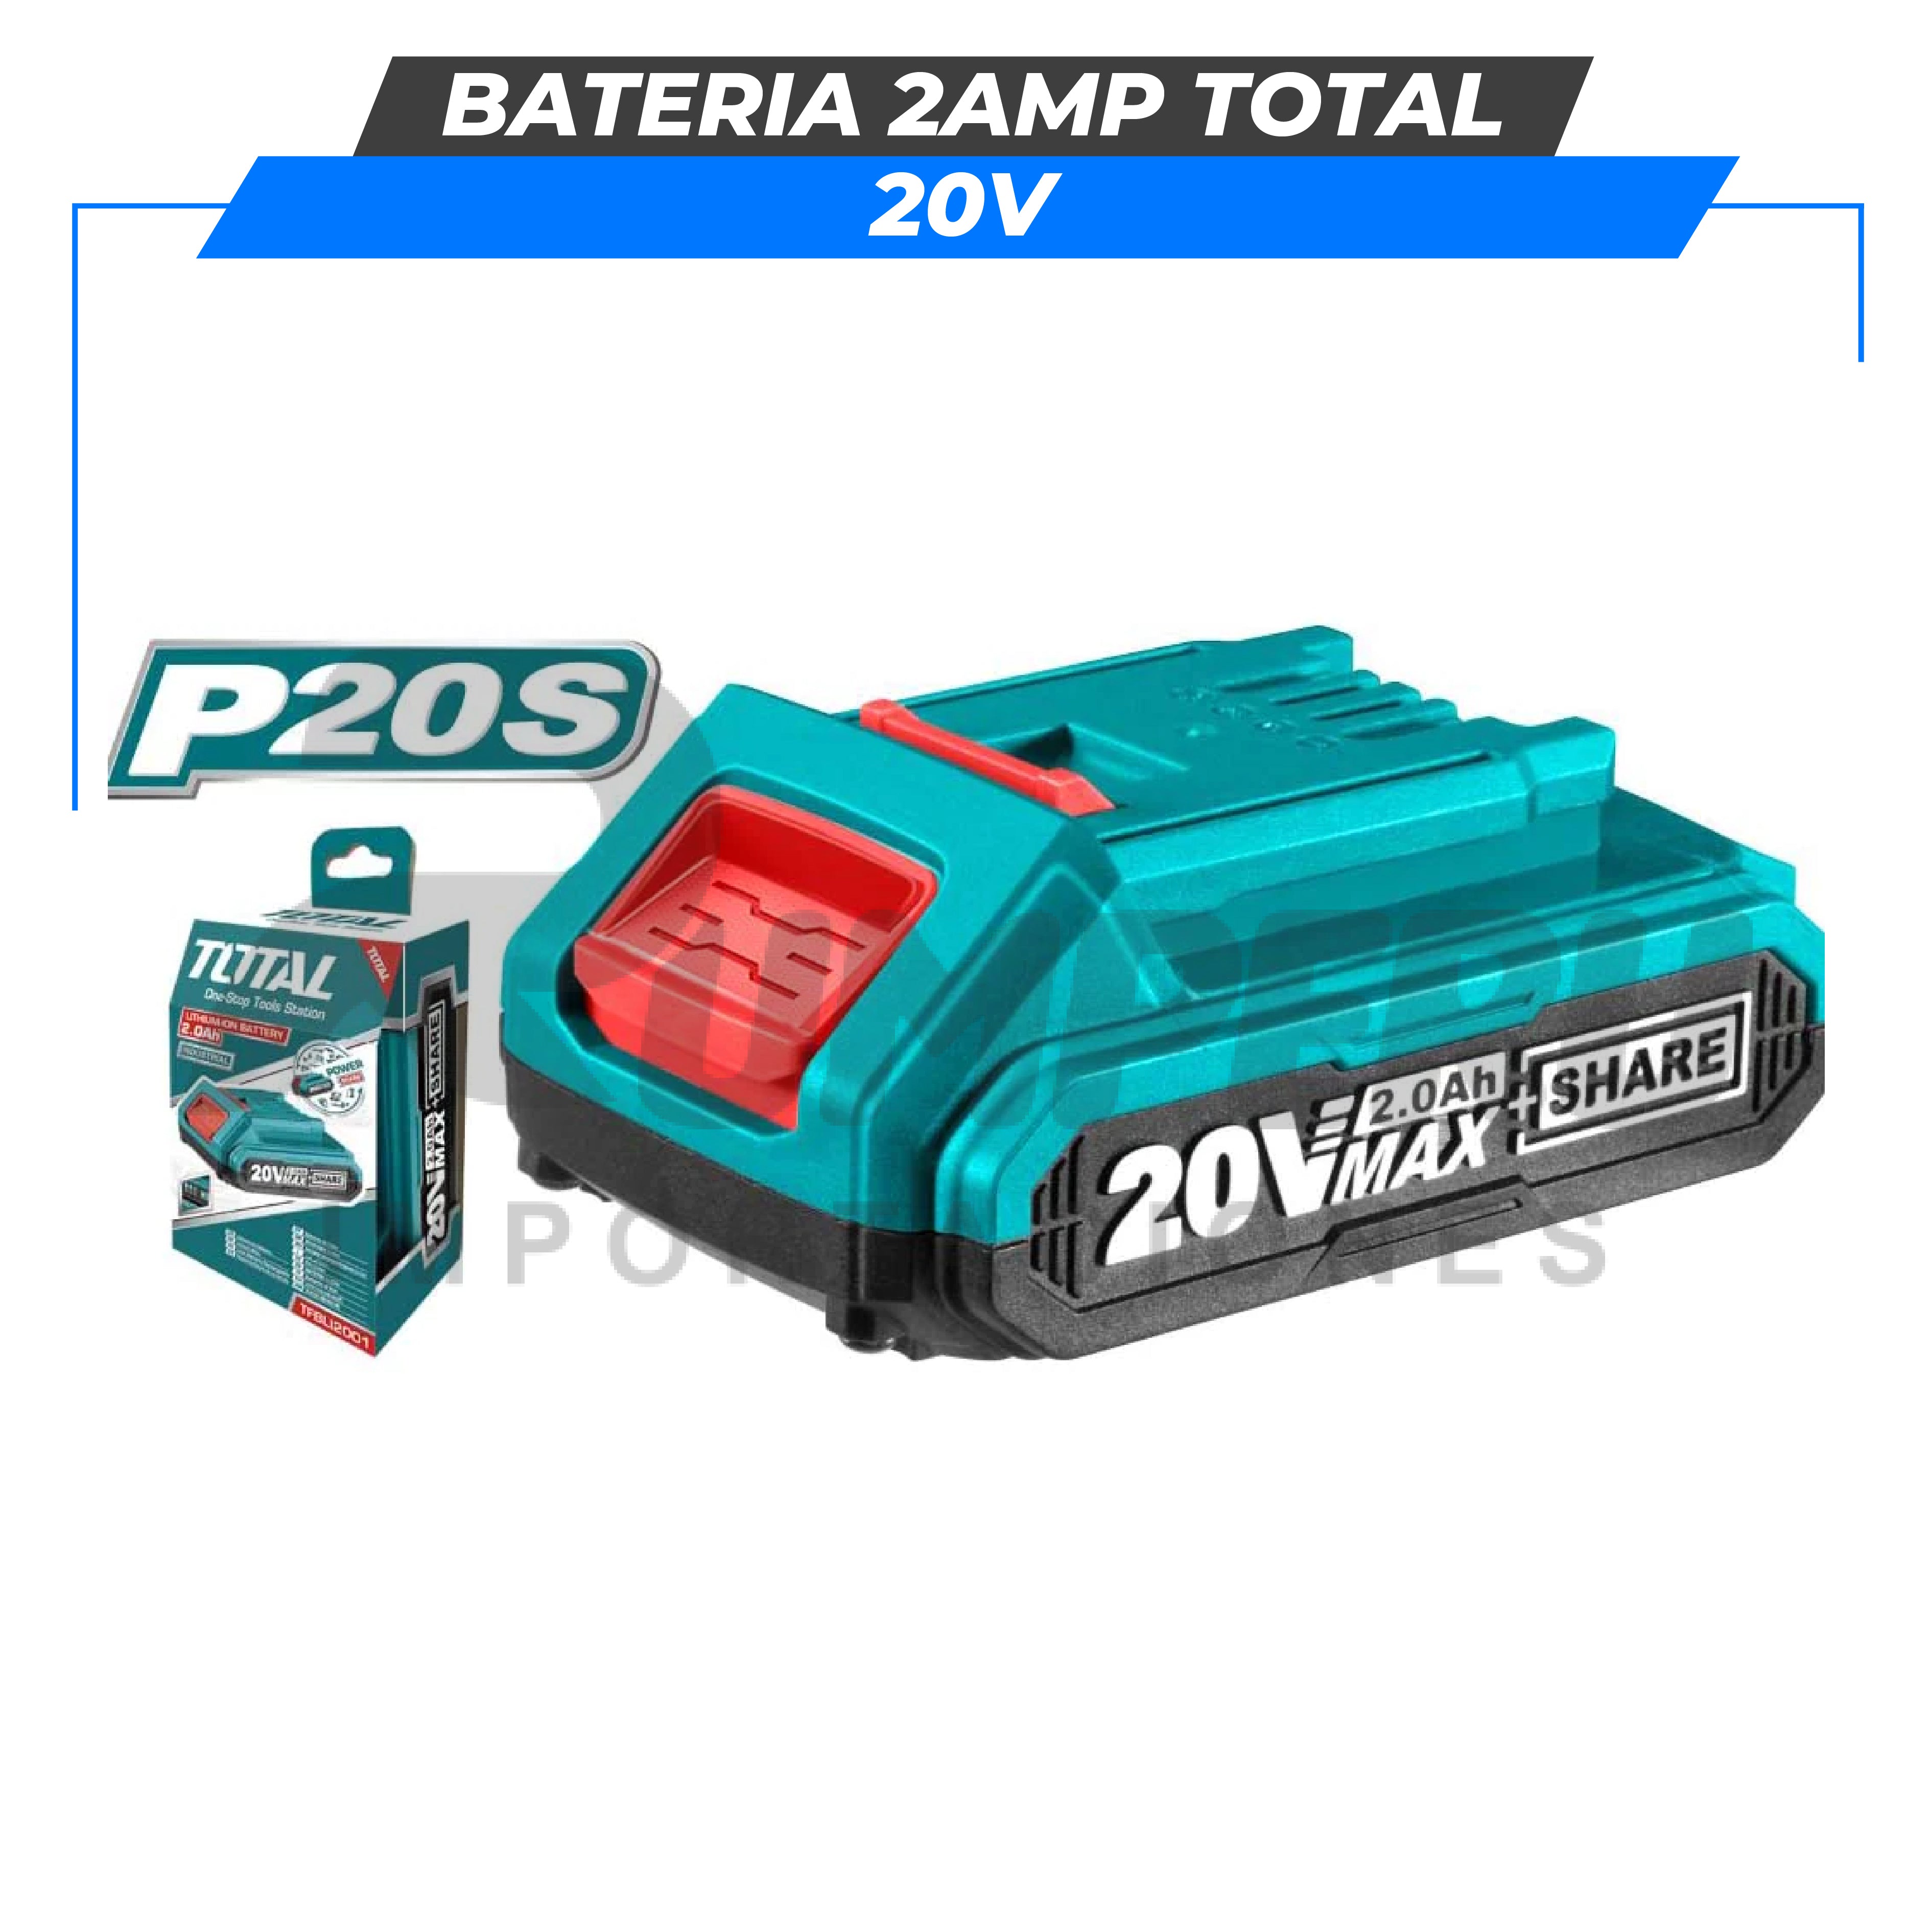 Bateria 20v 2 amp TOTAL